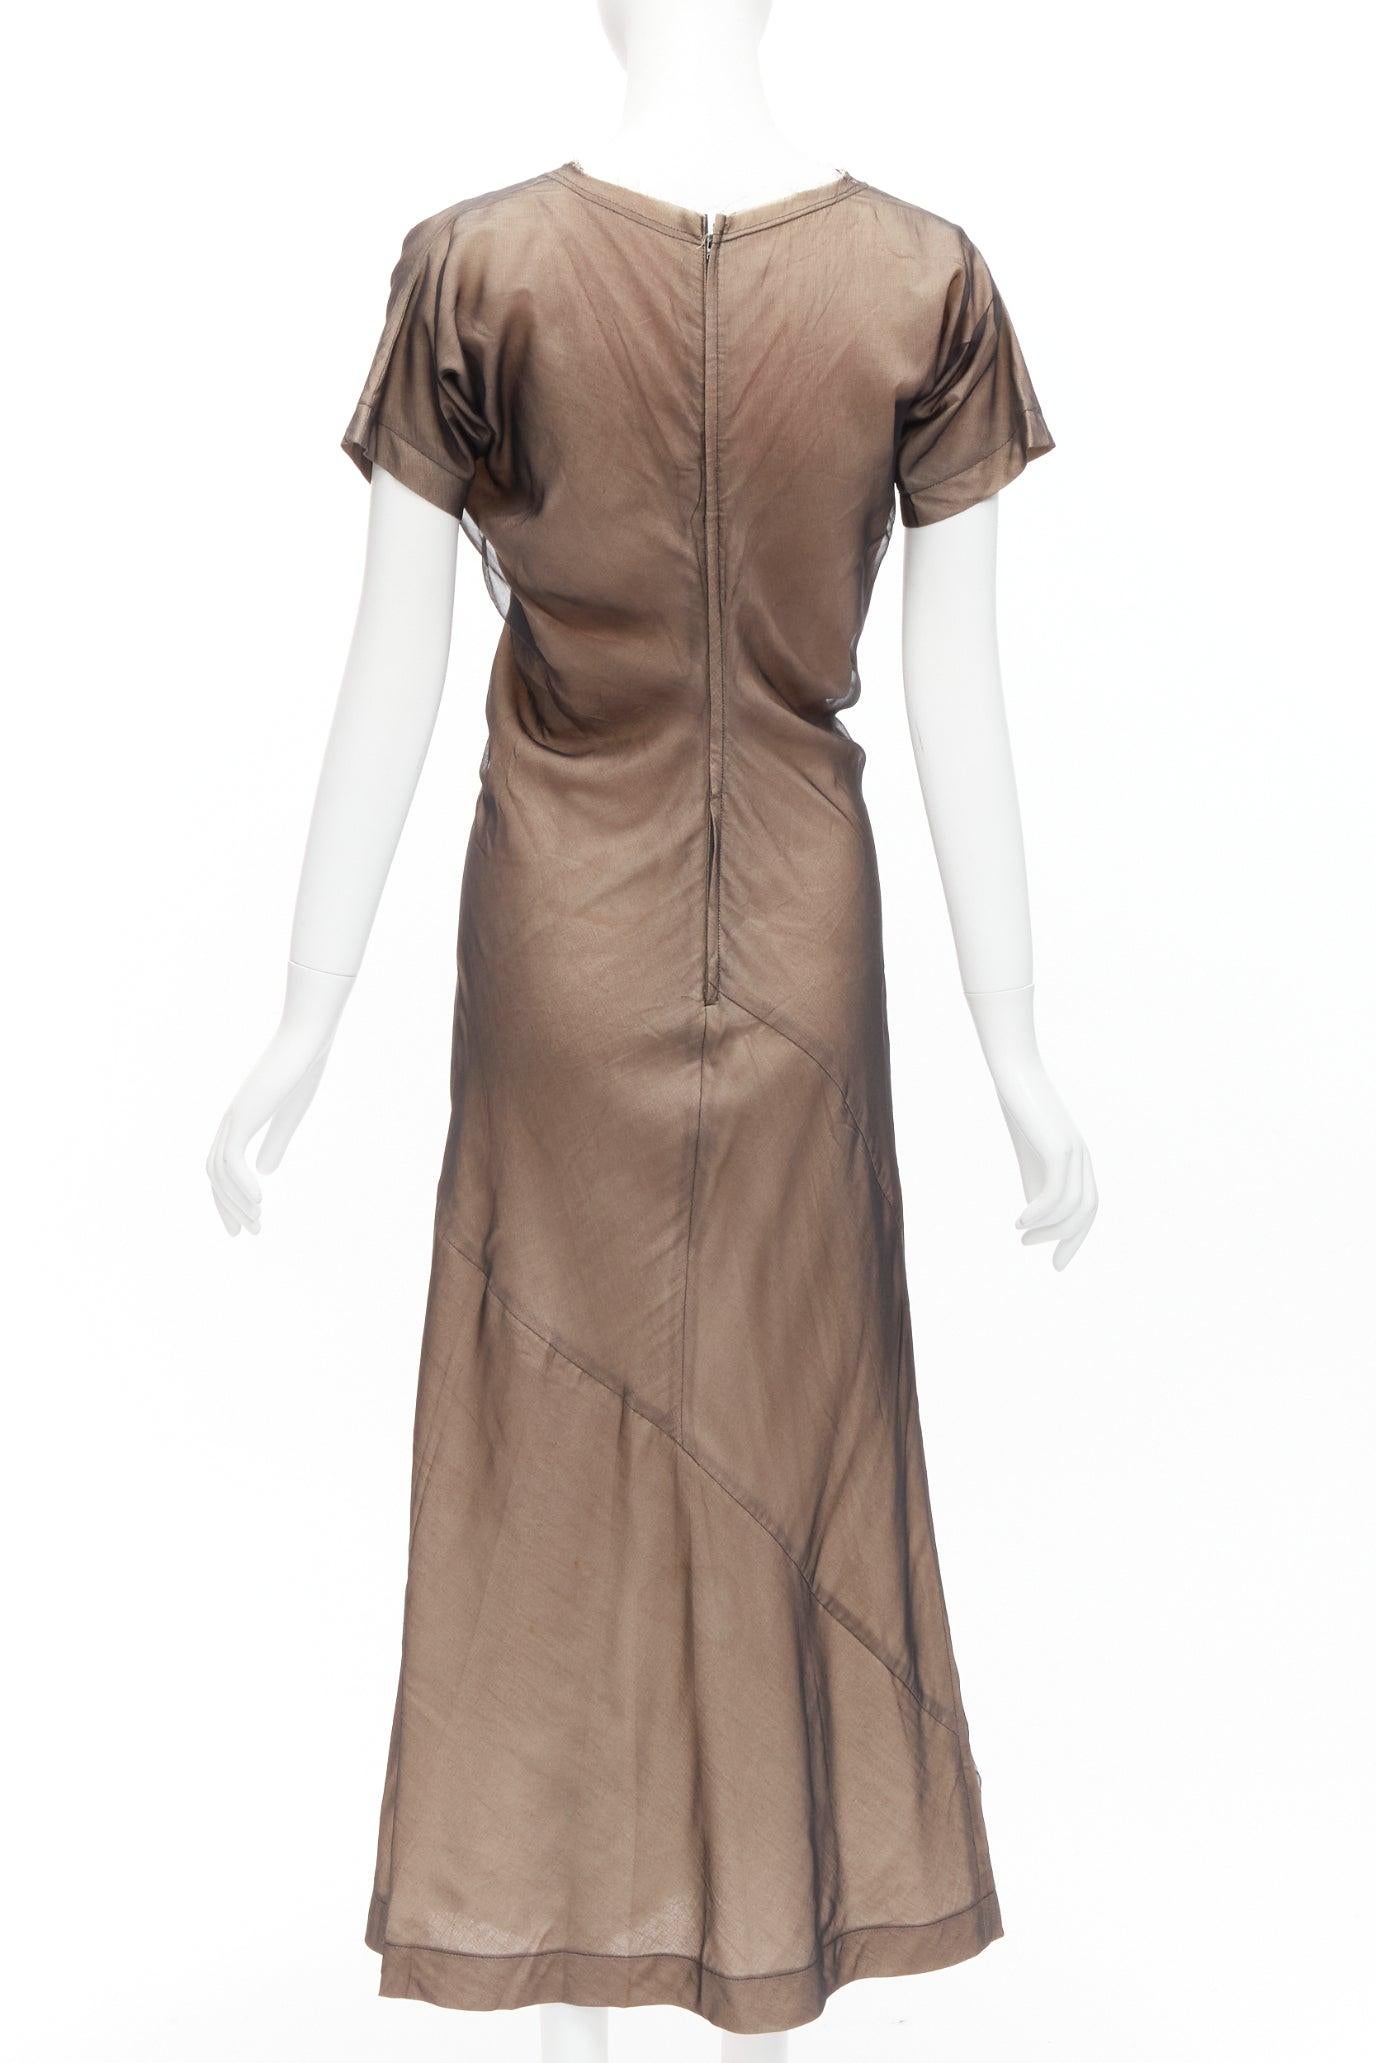 COMME DES GARCONS Vintage nude sheer overlay A-line bias dress S Cindy Sherman For Sale 1